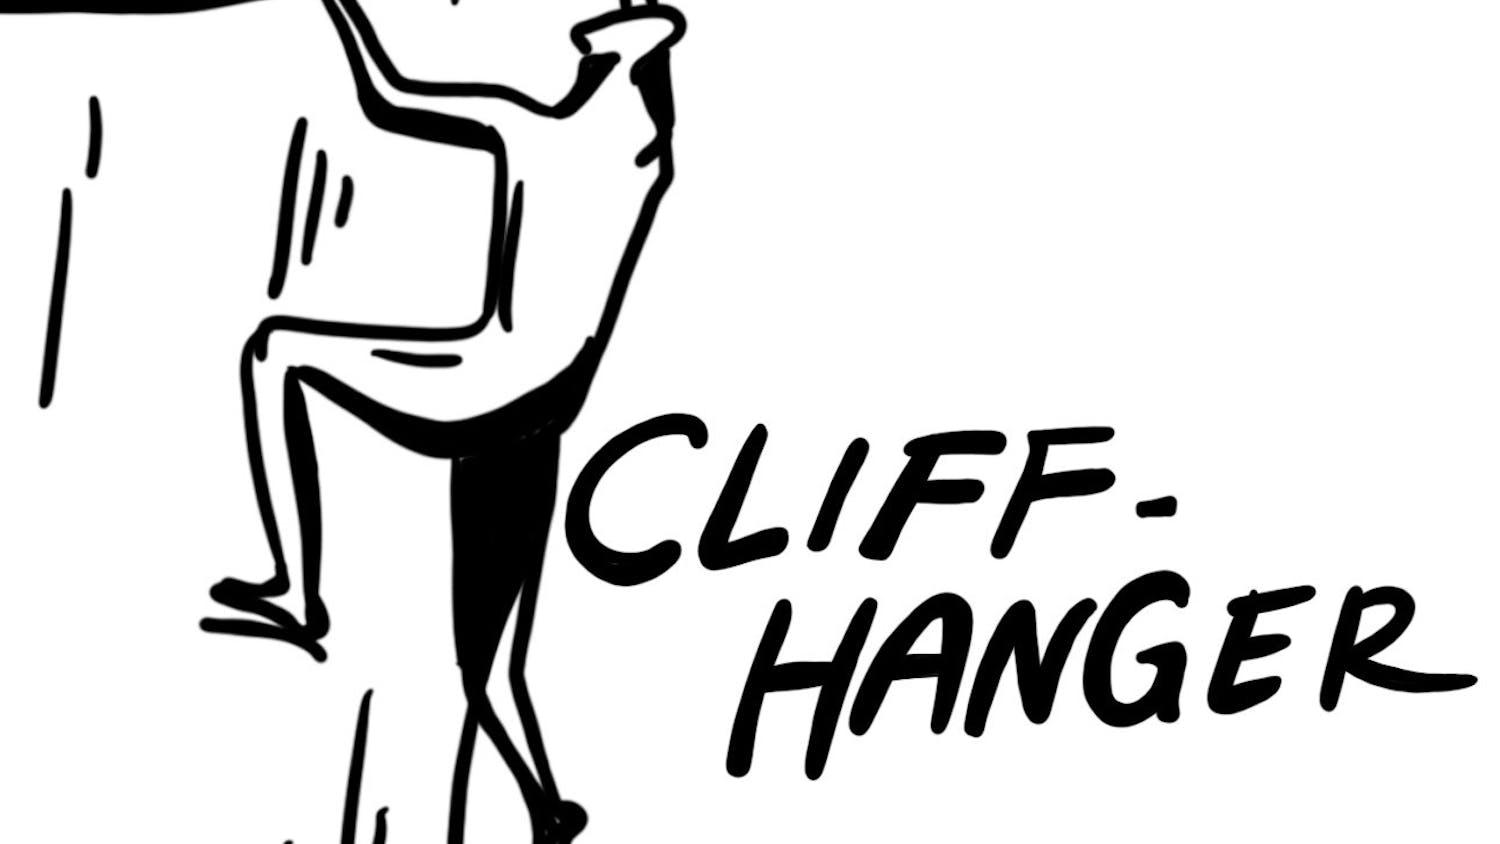 Cliff-Hanger — Pia Contreras (1).jpeg